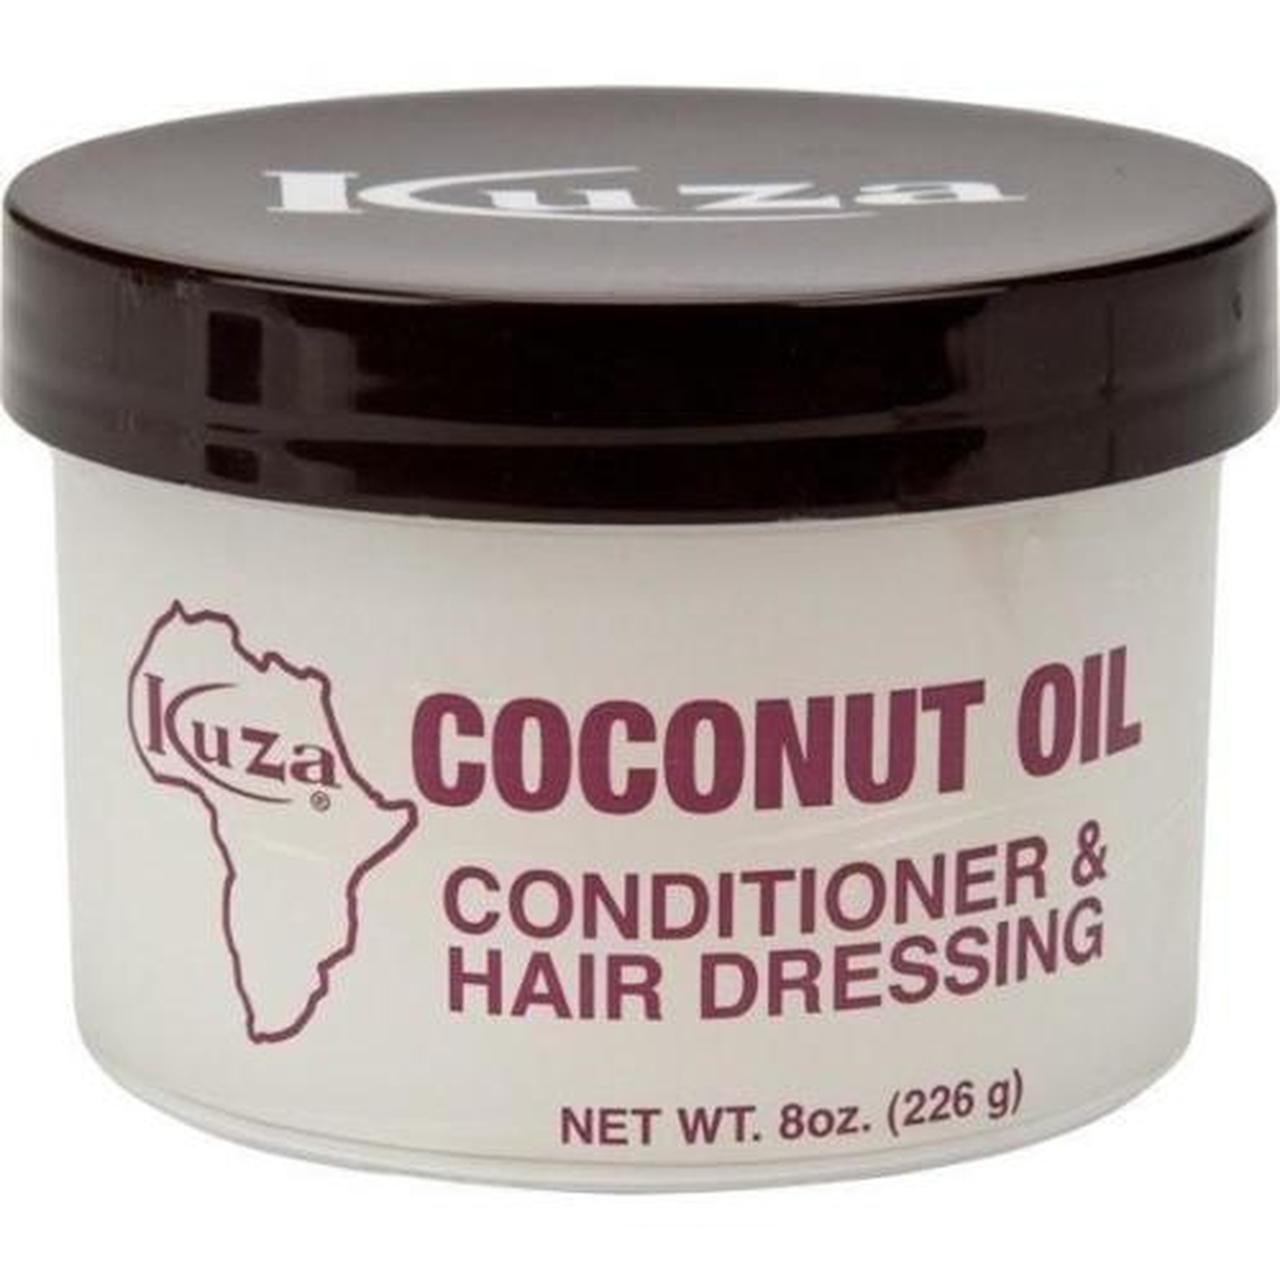 Kuza Coconut Oil Conditioner & Hair Dressing - 8oz